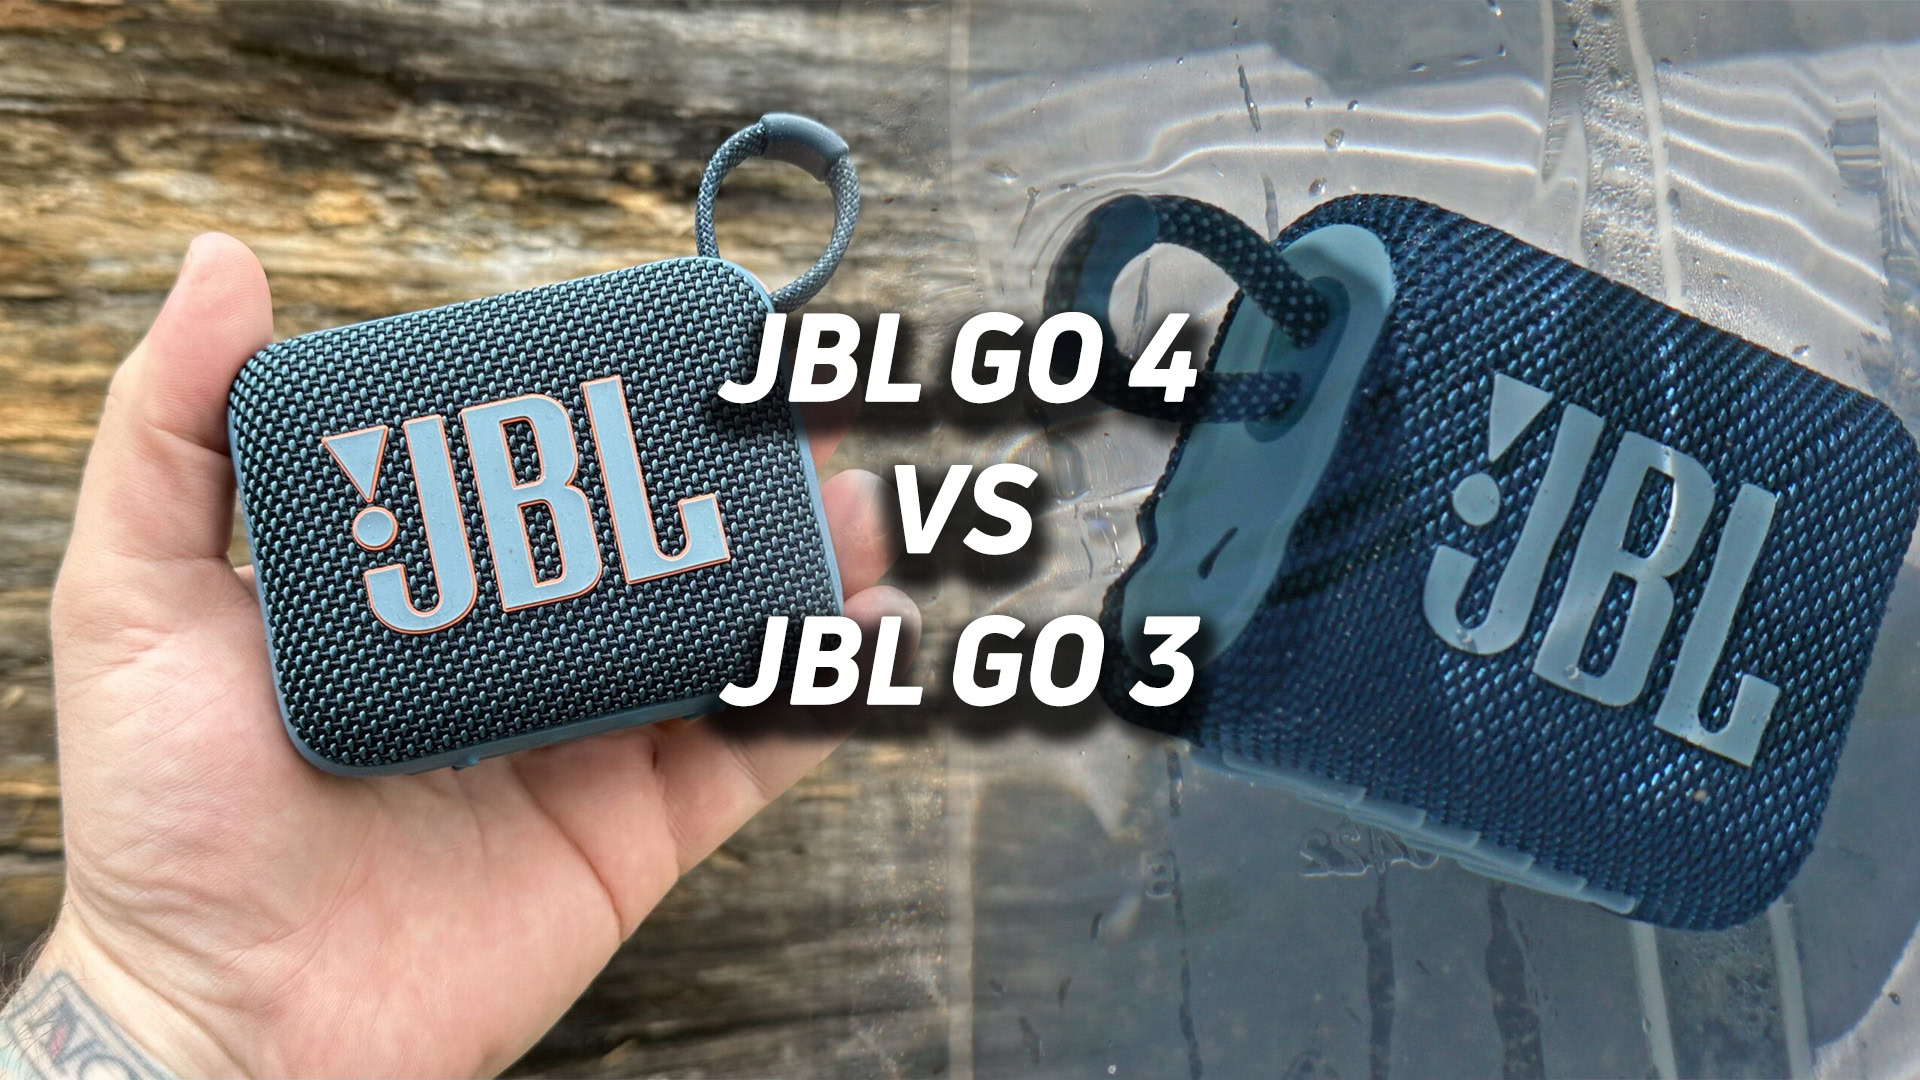 JBL Go 4 next to a JBL Go 3.